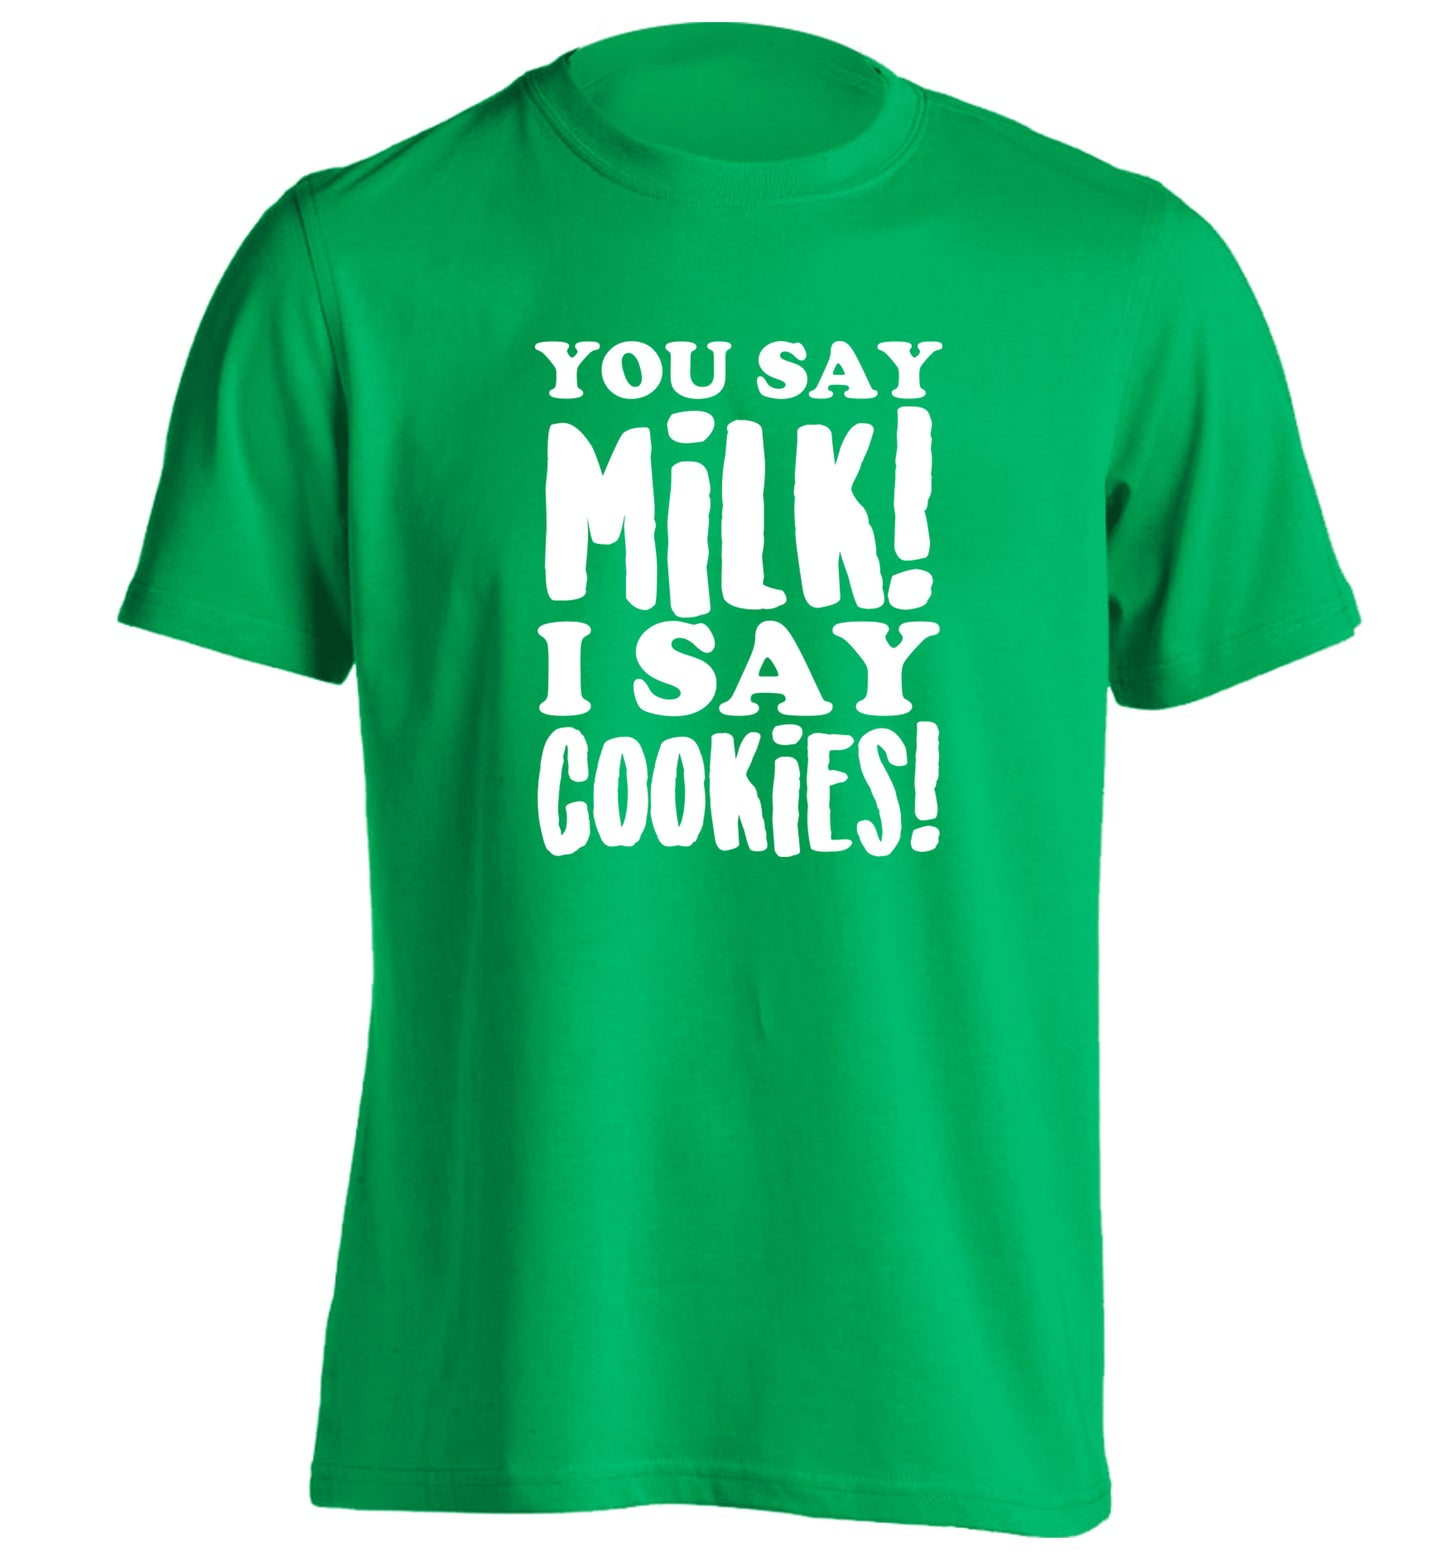 You say milk I say cookies! adults unisex green Tshirt 2XL